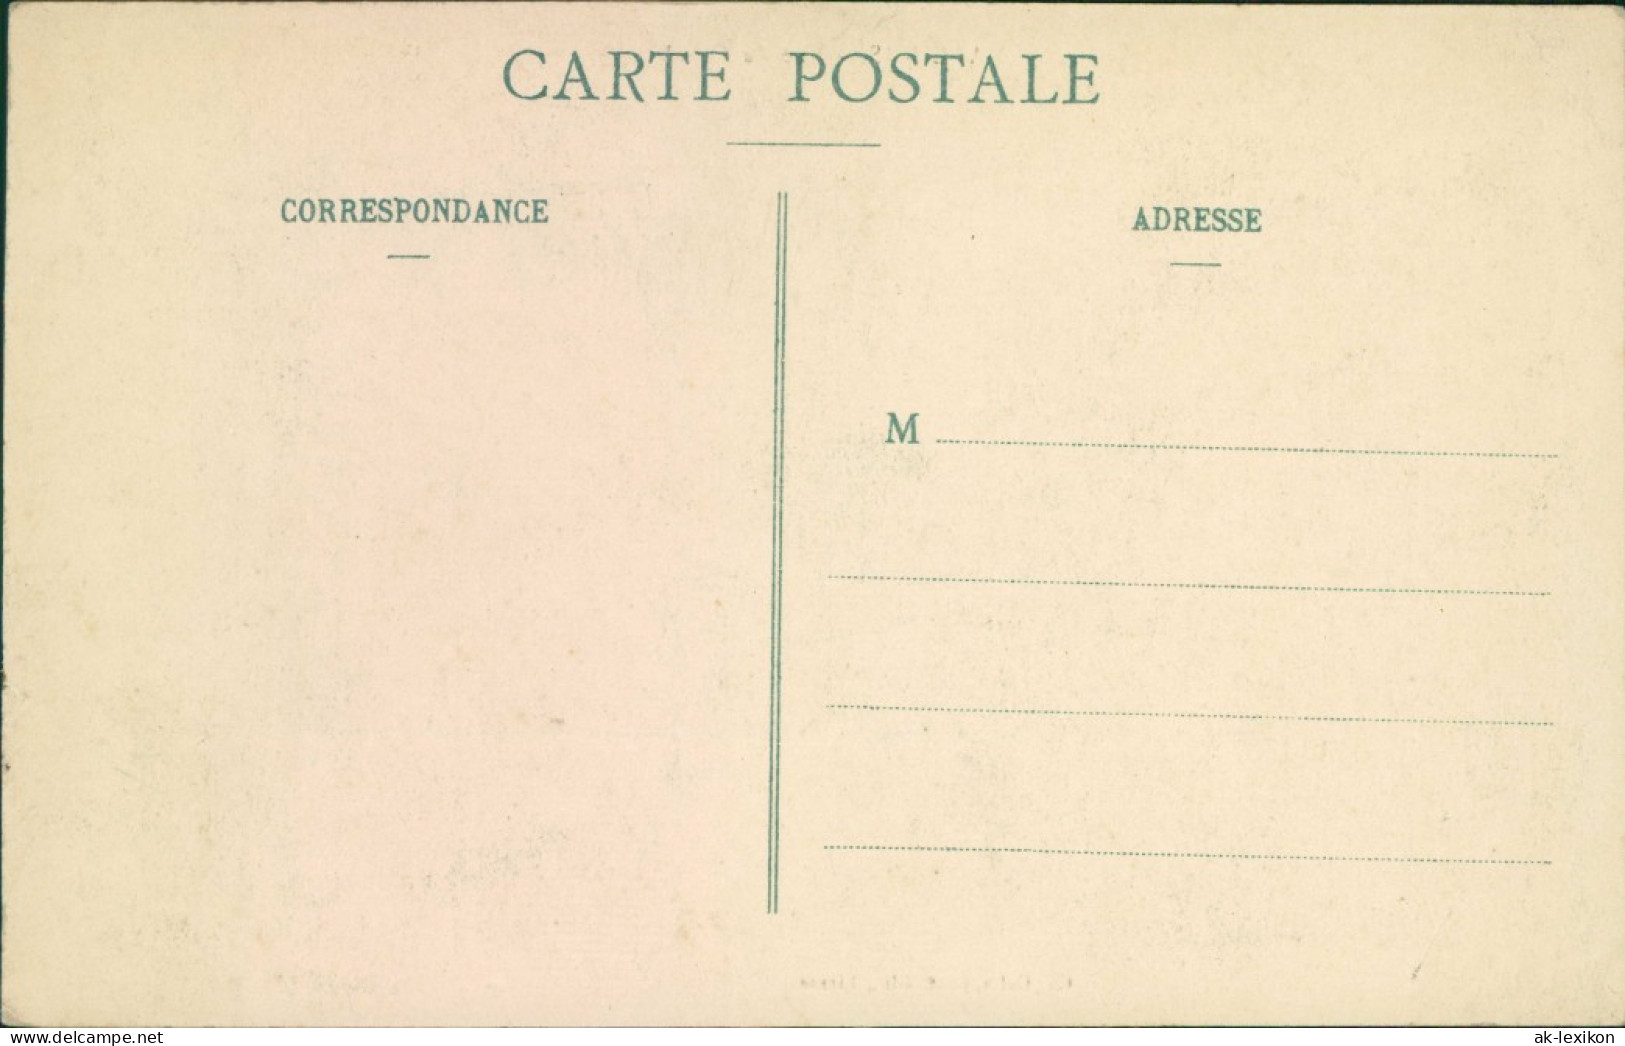 CPA Marchais Vue Du Canal 1908 - Other Municipalities